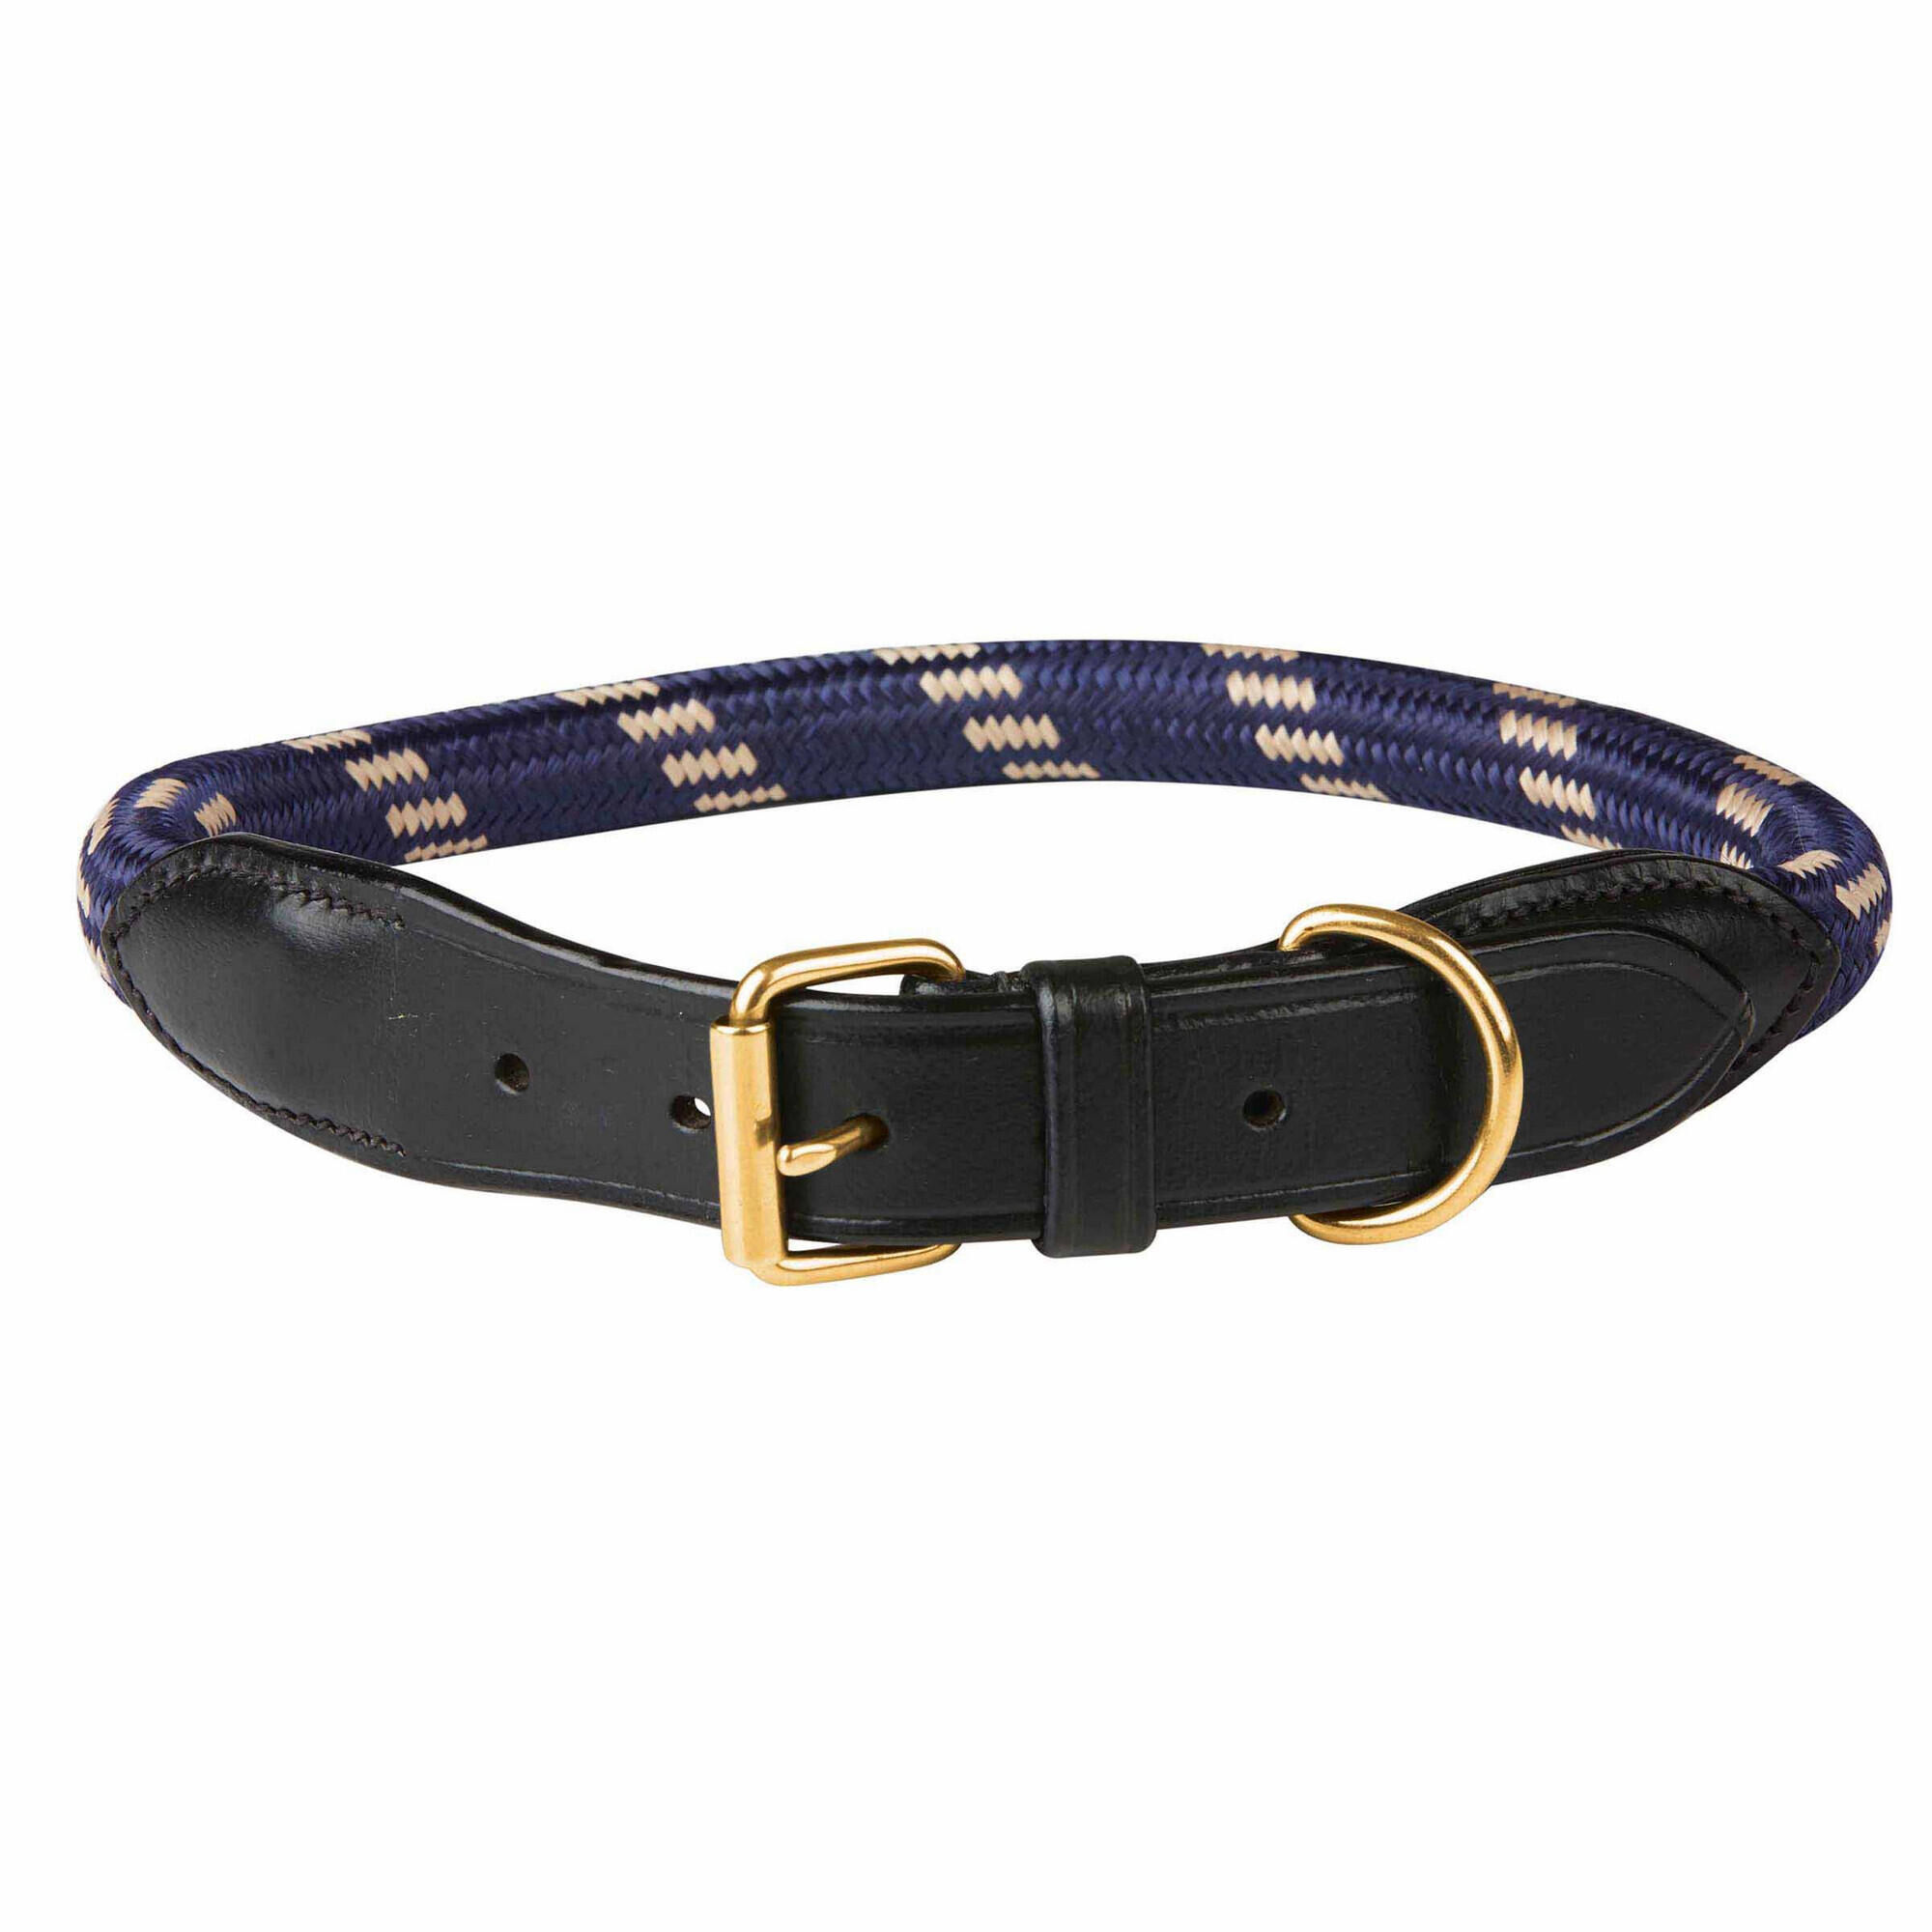 WEATHERBEETA Rope Leather Dog Collar (Navy/Brown)